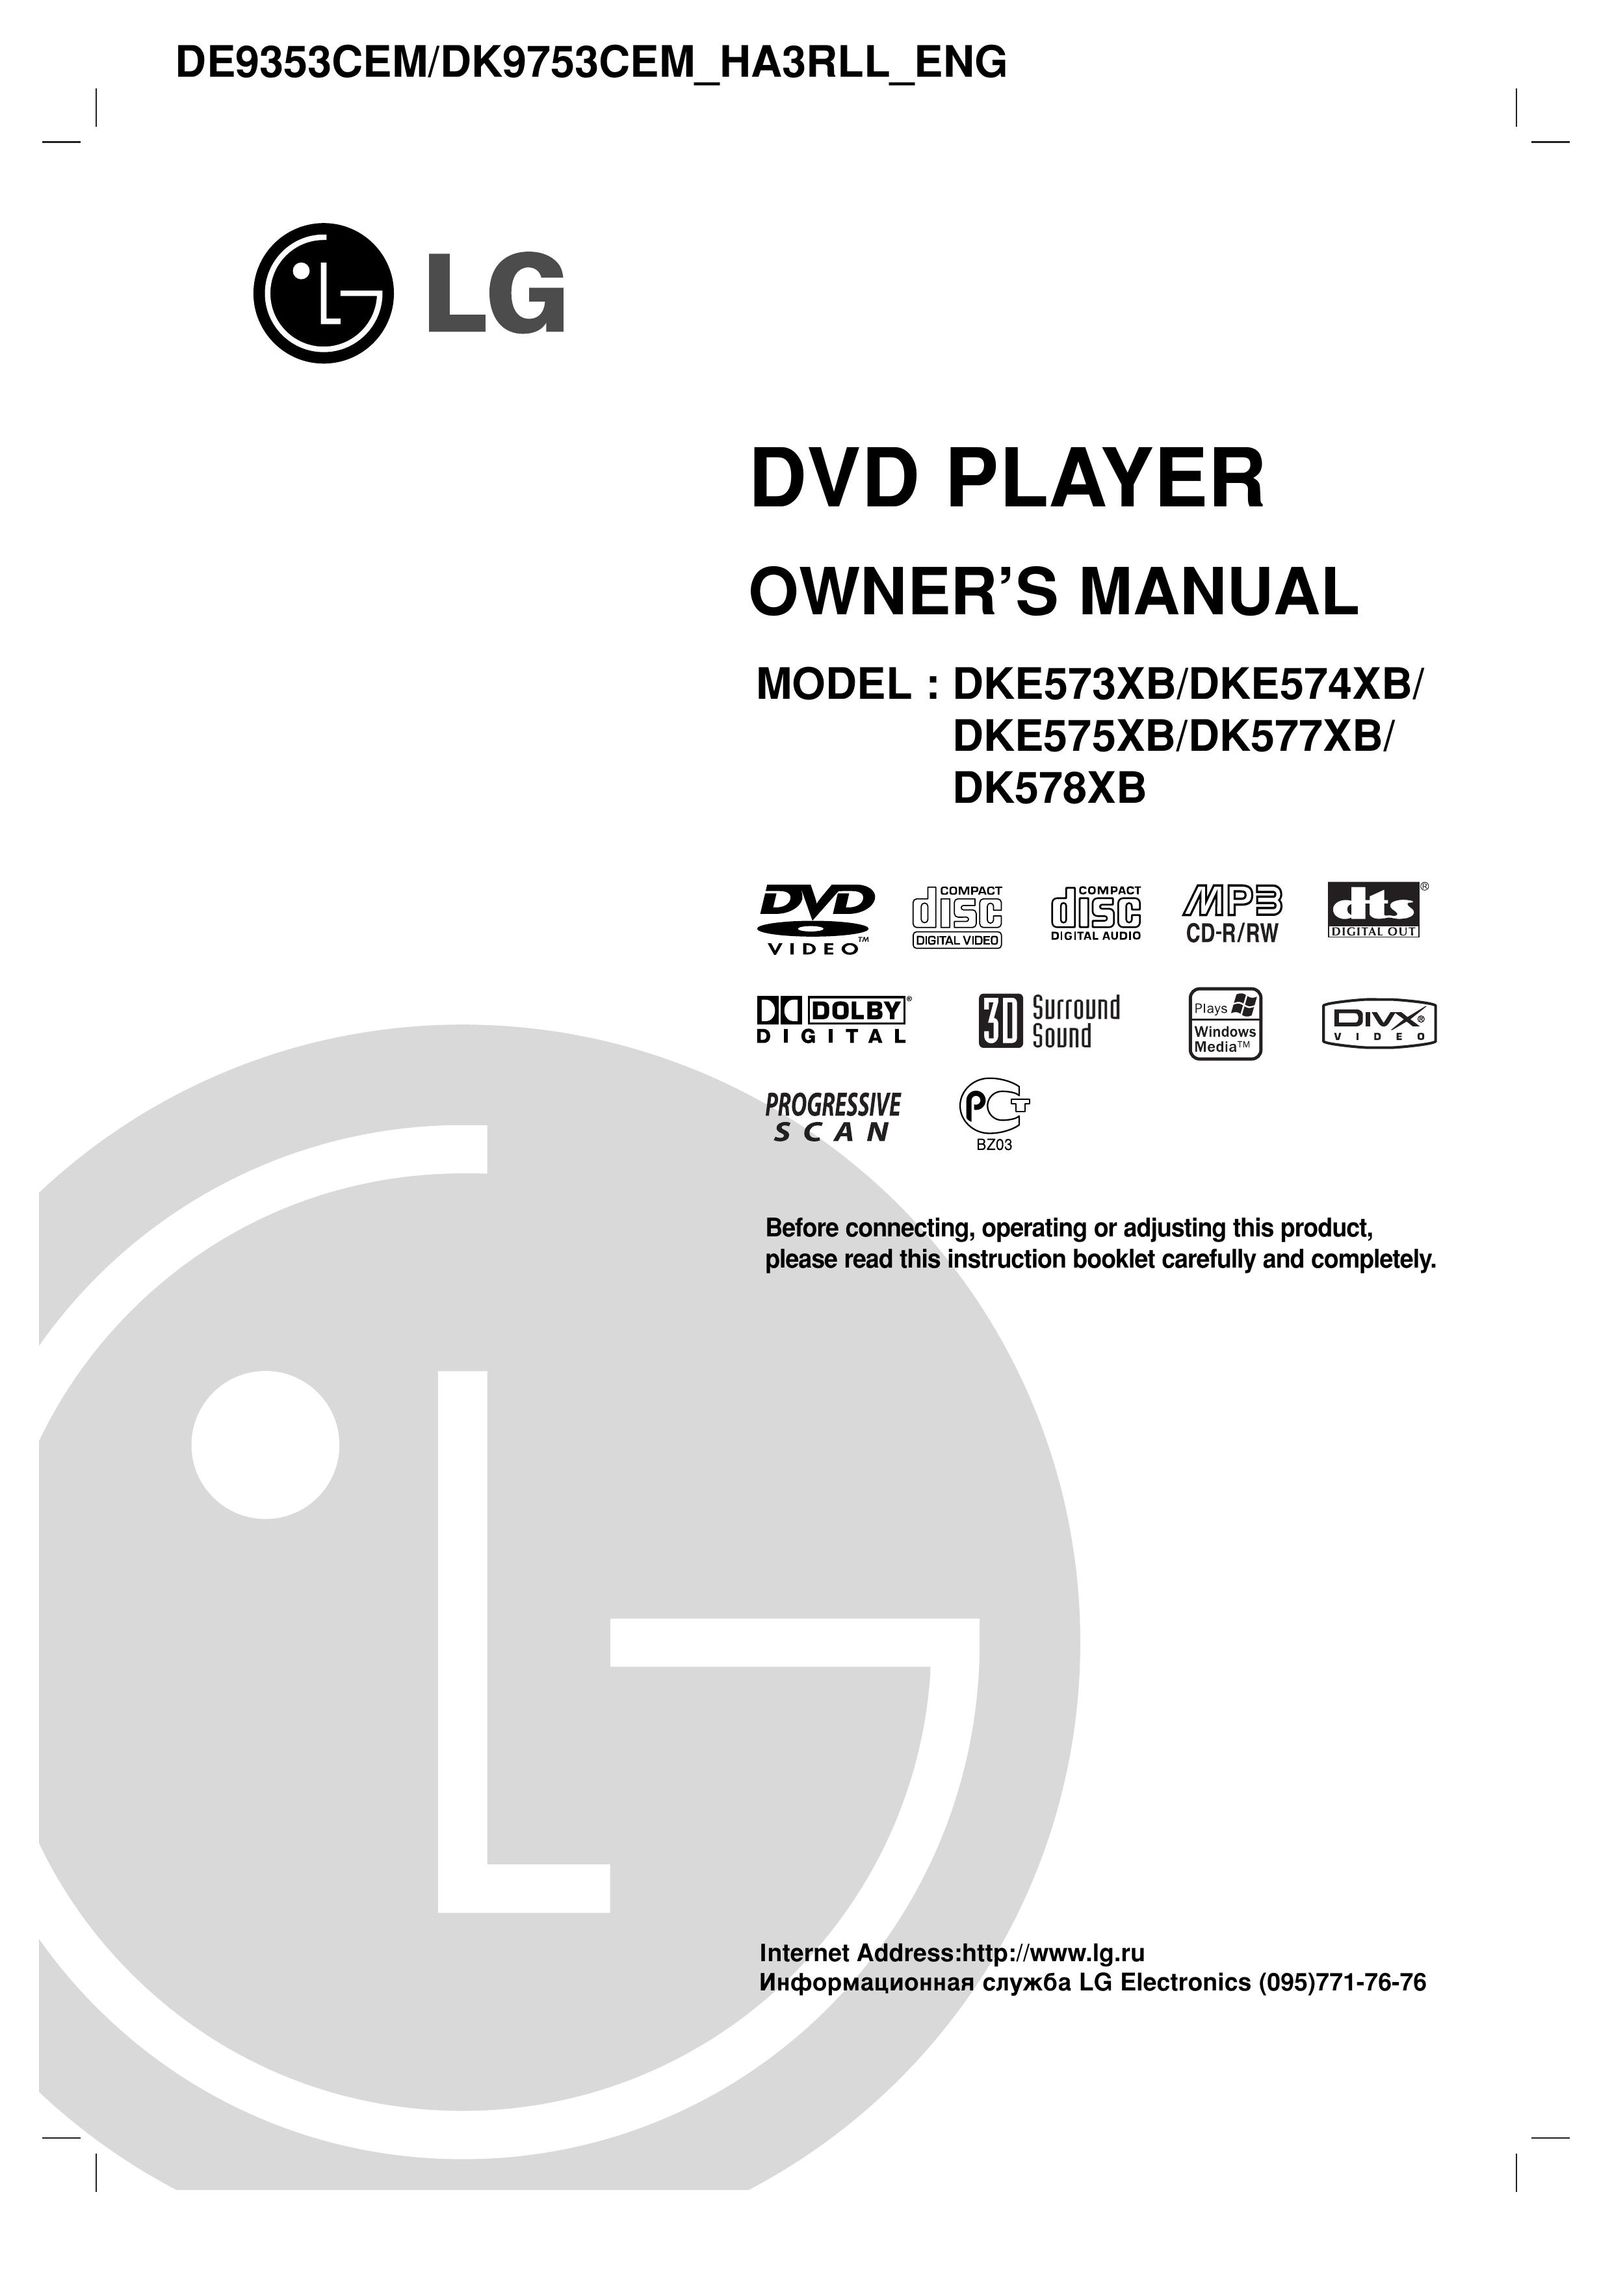 LG Electronics DKE574XB DVD Player User Manual